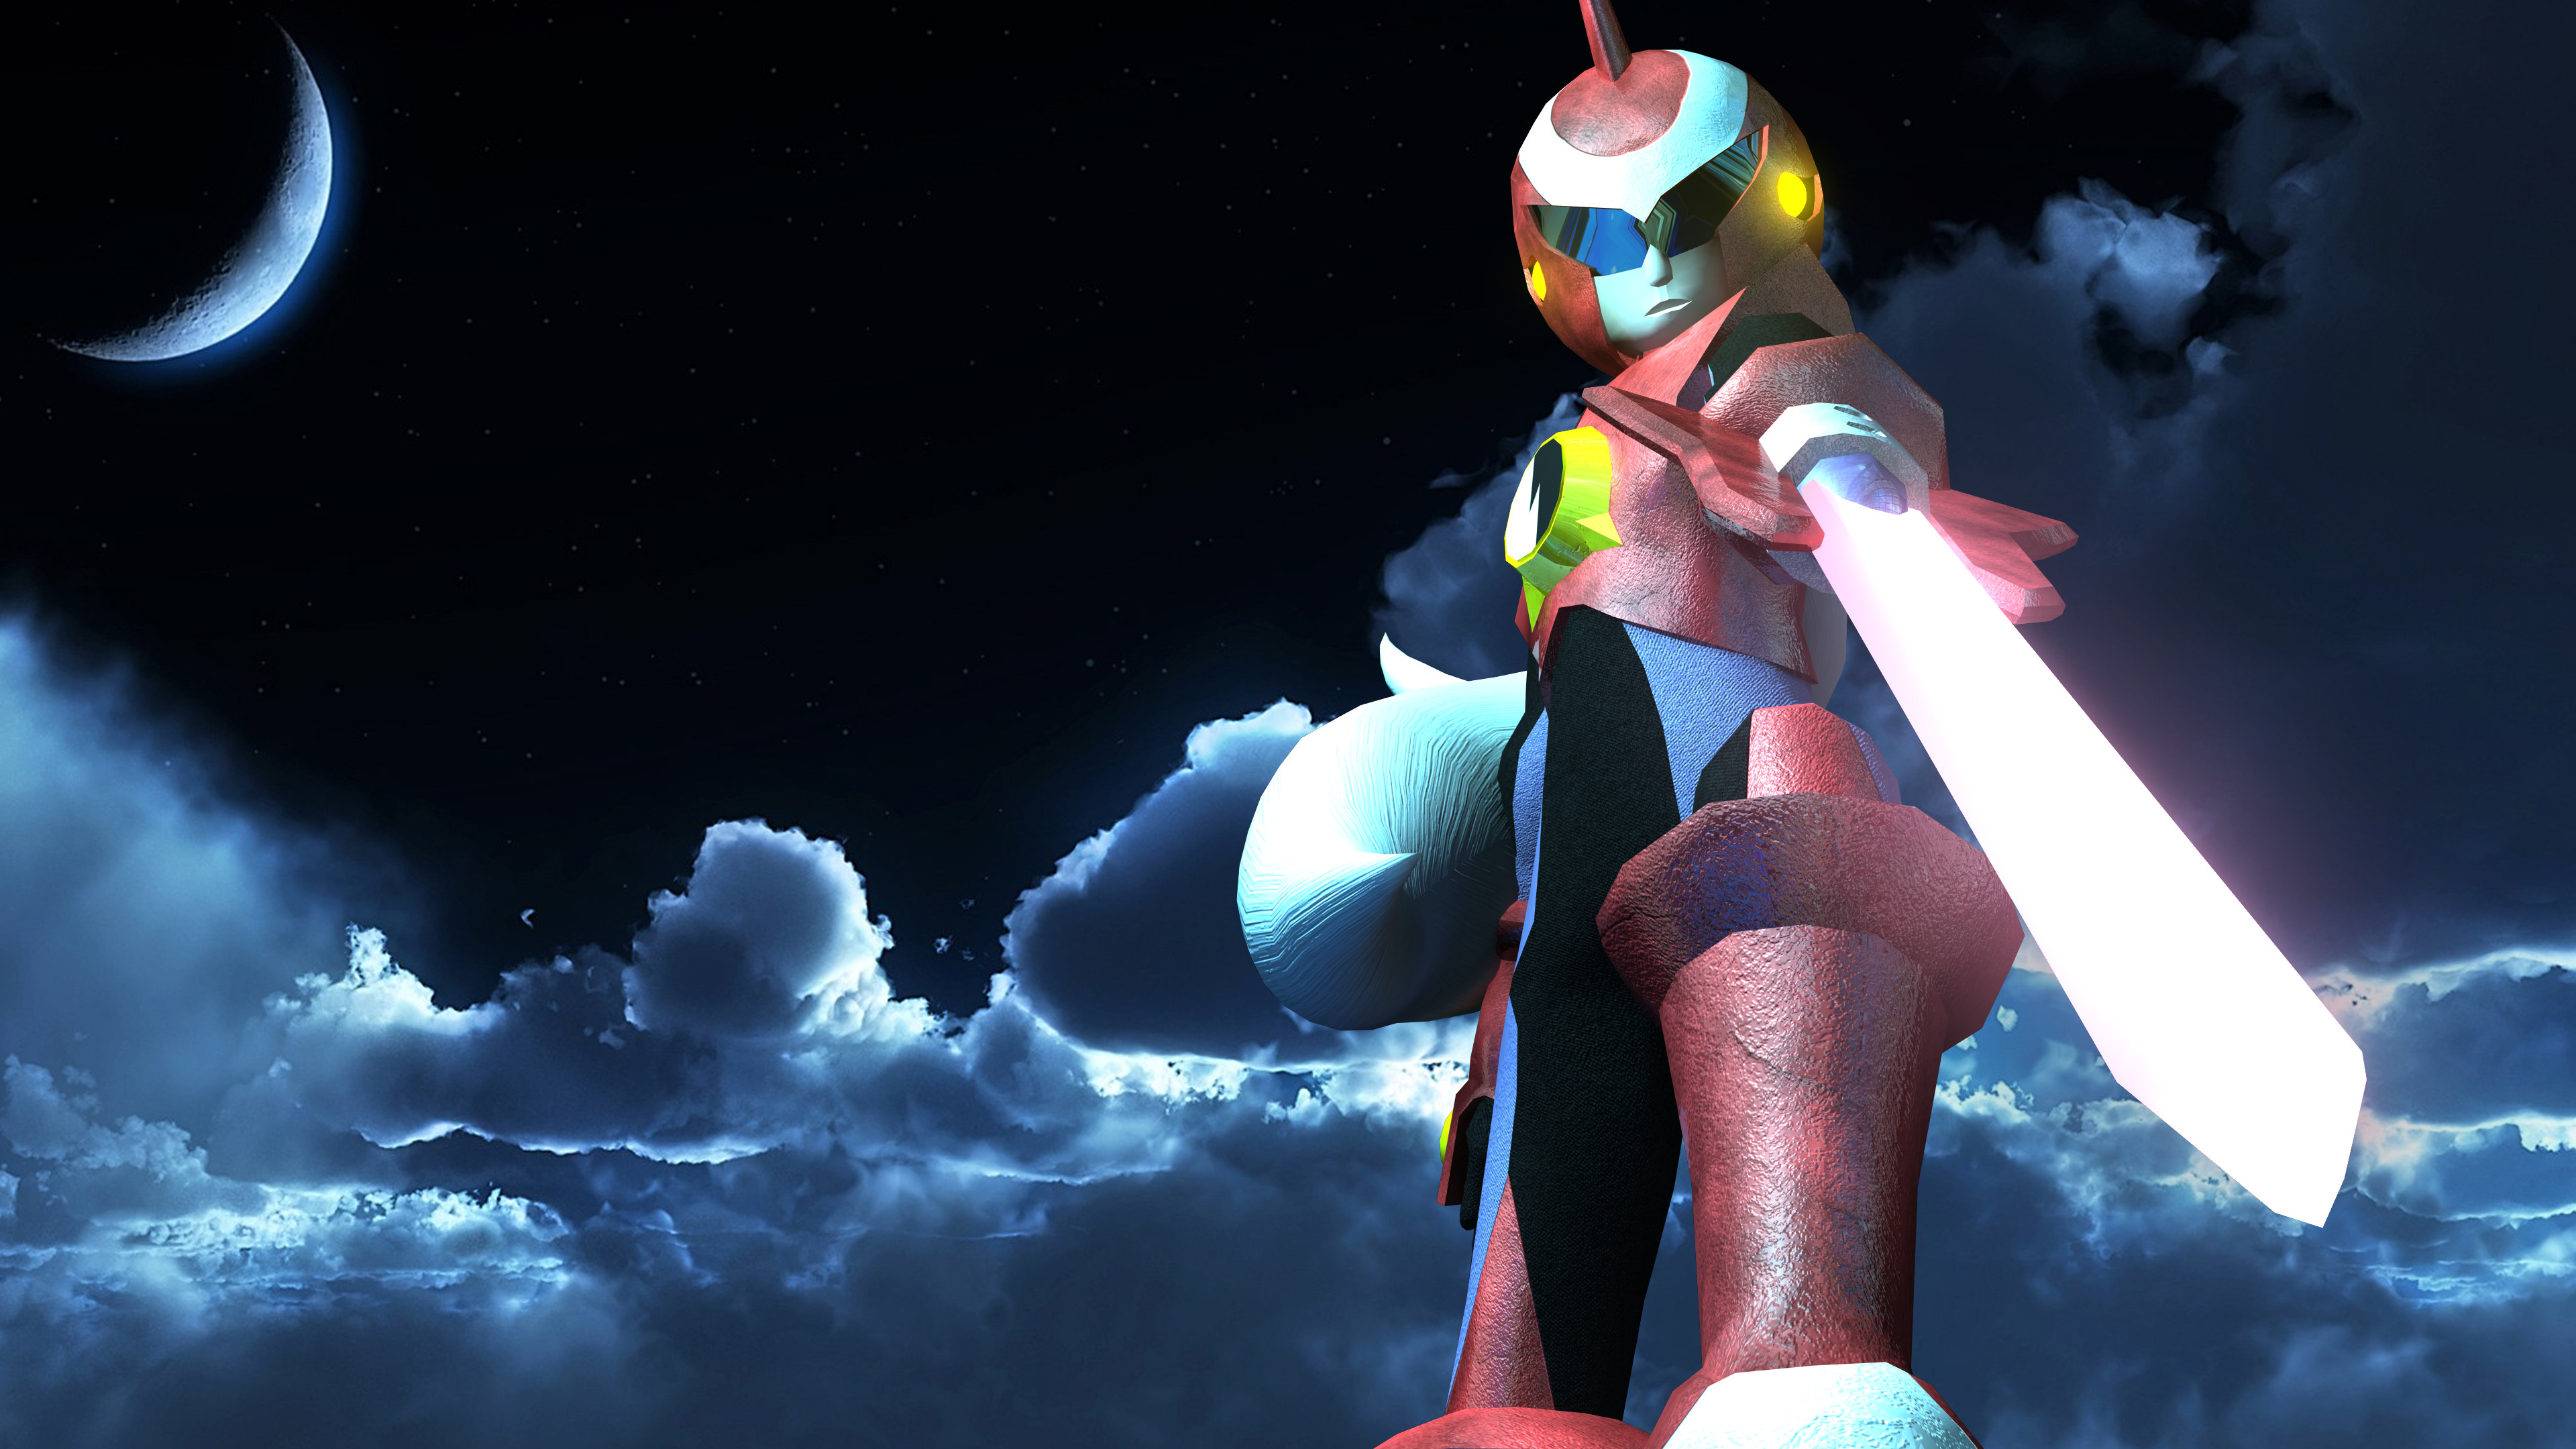 3840x2160 ... Mega Man - Protoman.EXE 3D Model Render #2 by Stef93